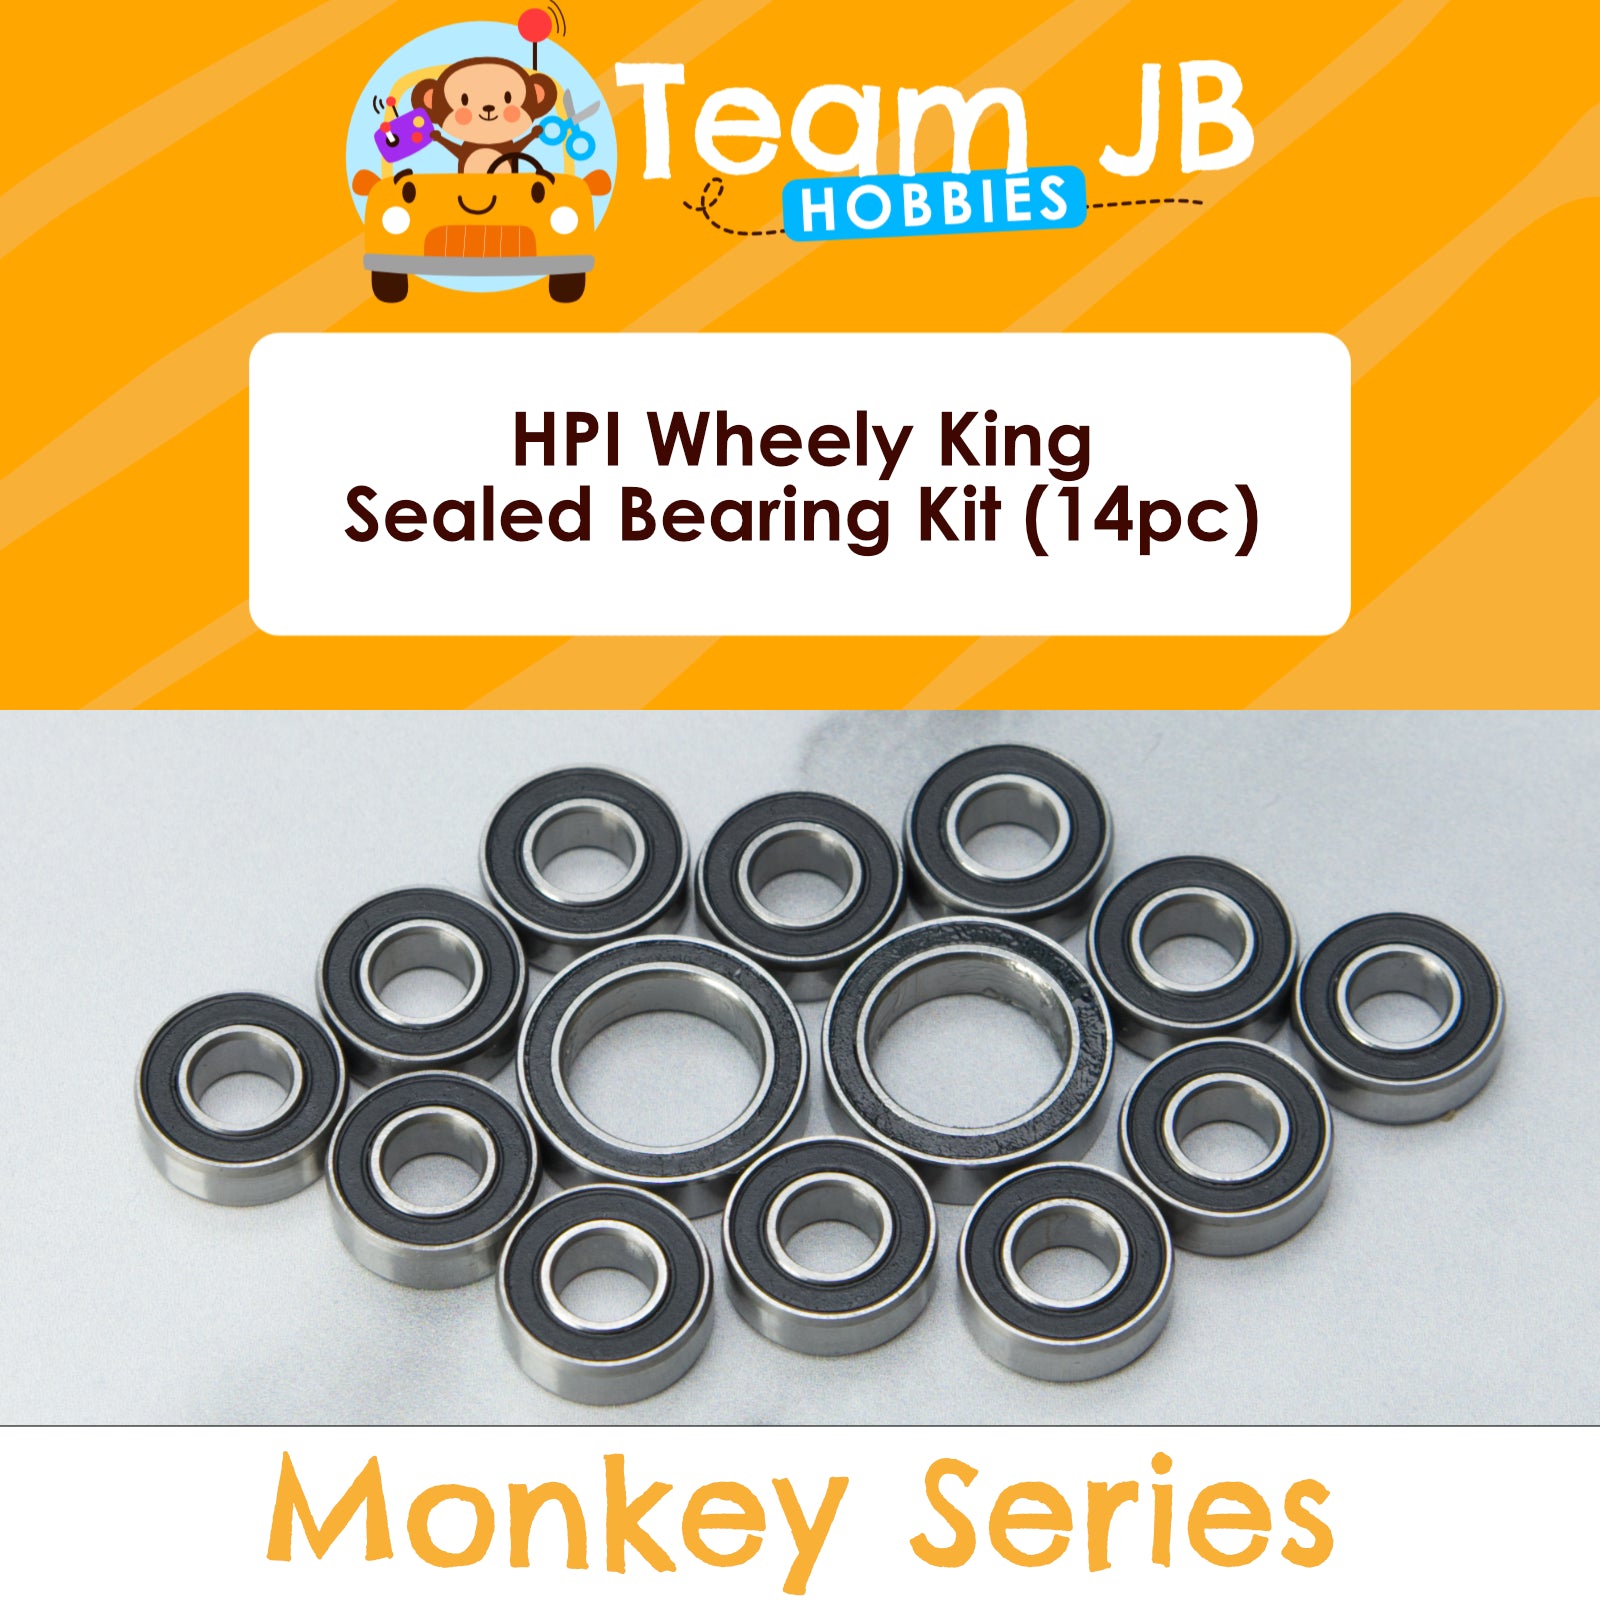 HPI Wheely King - Sealed Bearing Kit